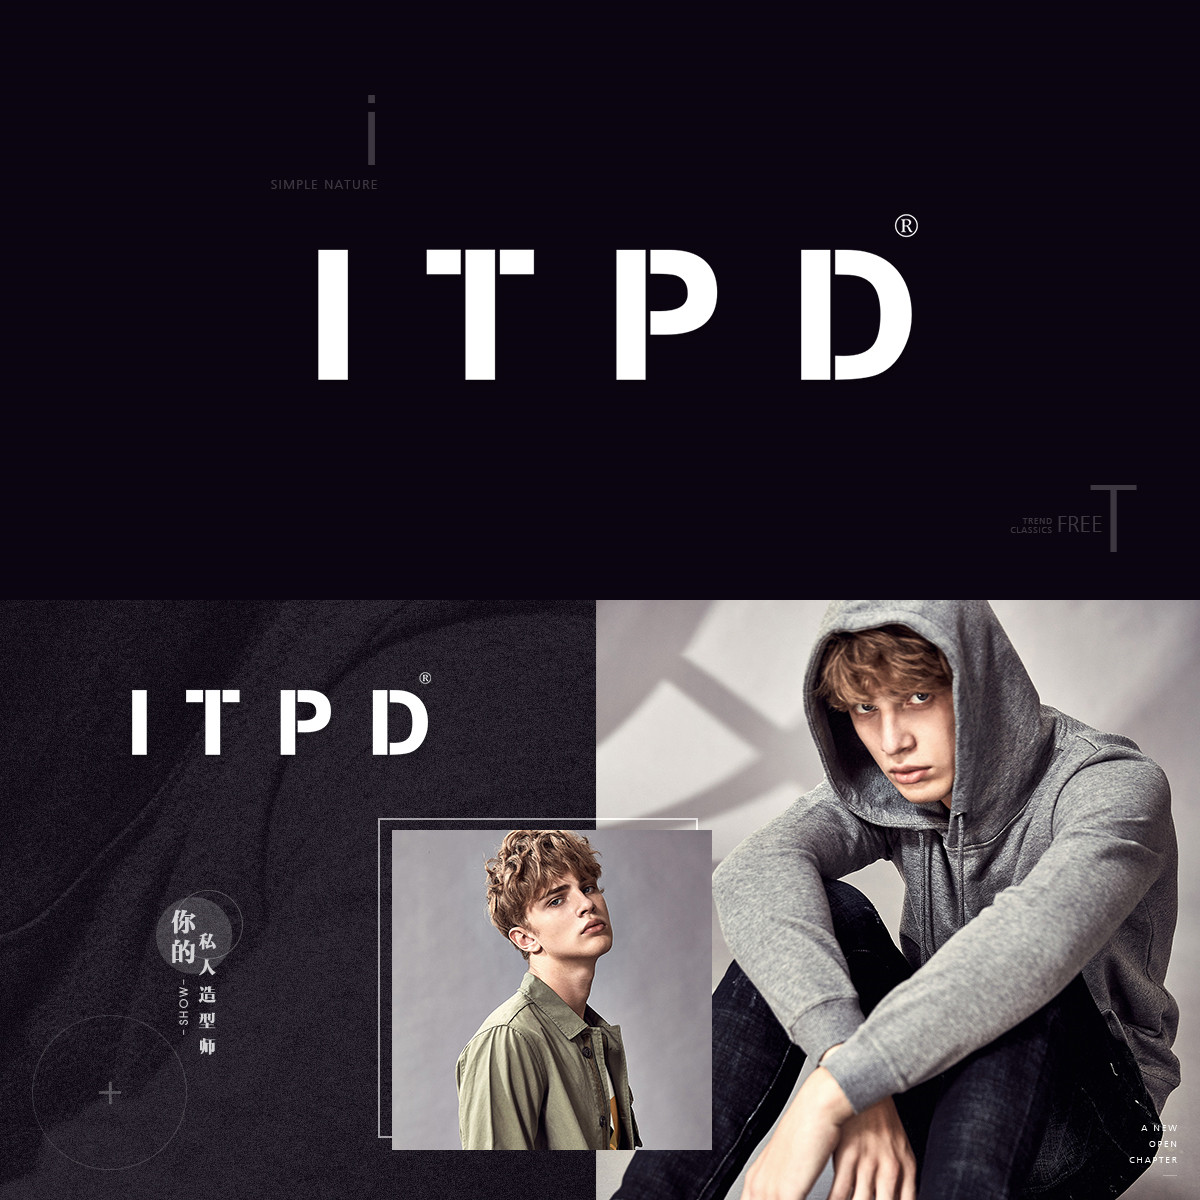 ITPD